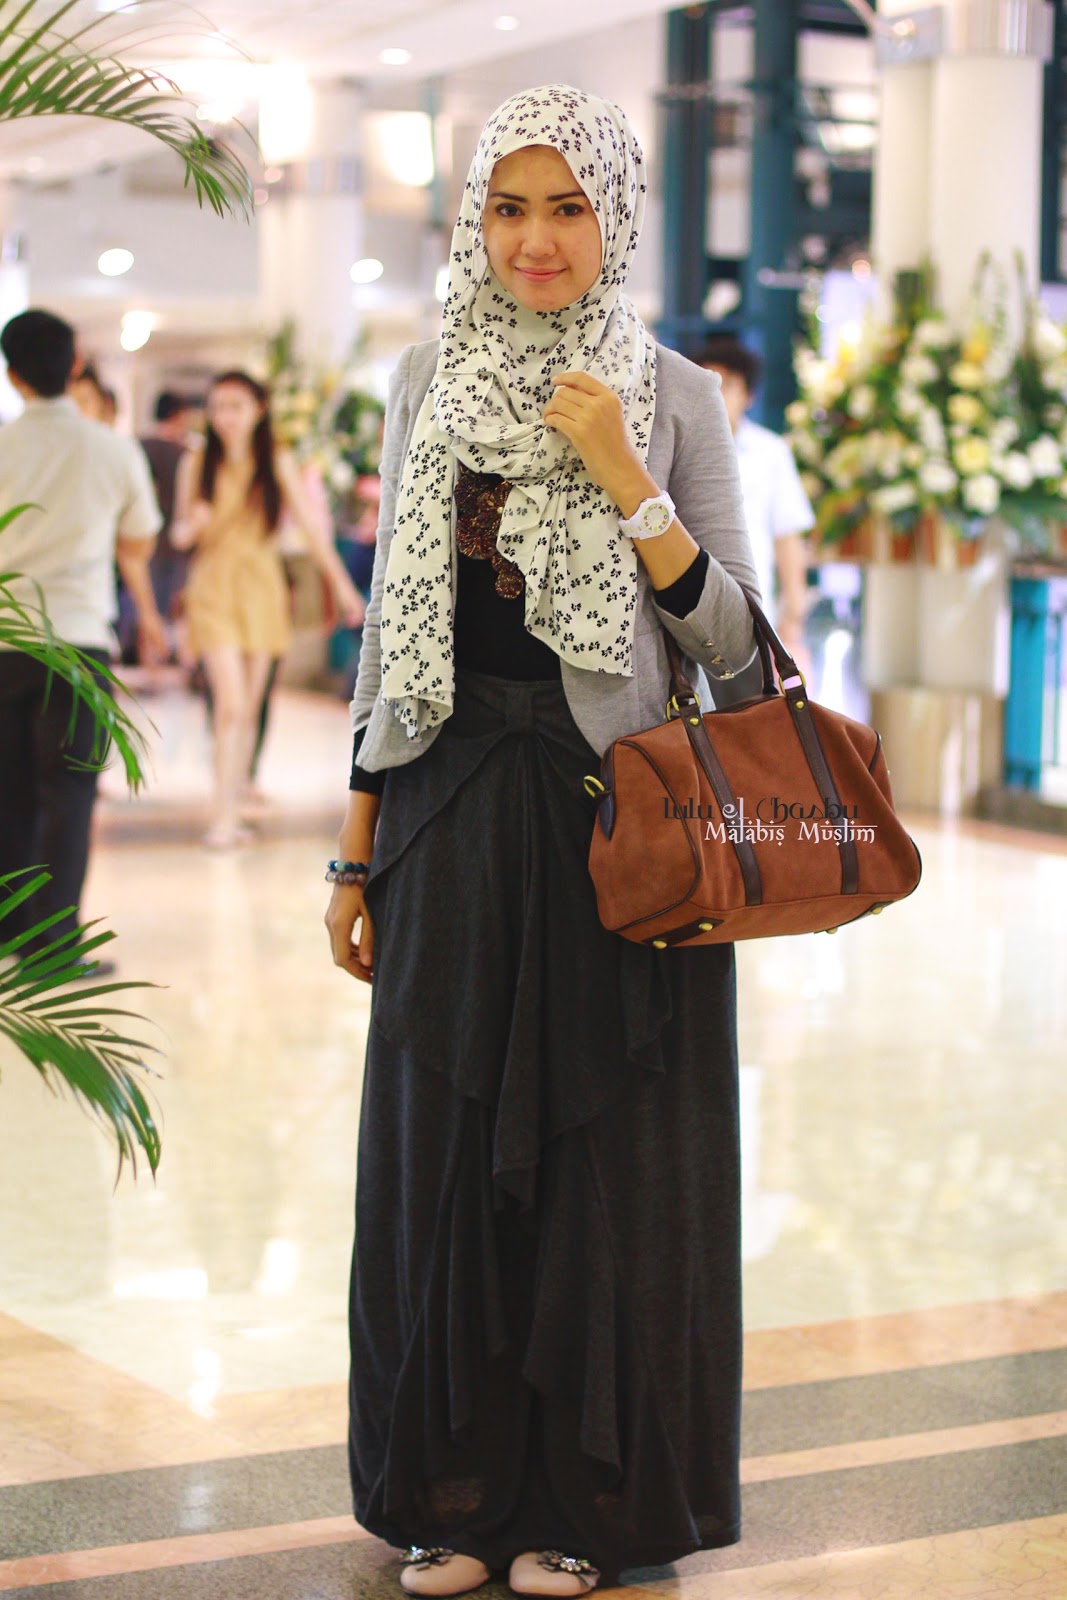 Never Left The Fashion Work-Malabis Moslem - Hijab Trade 